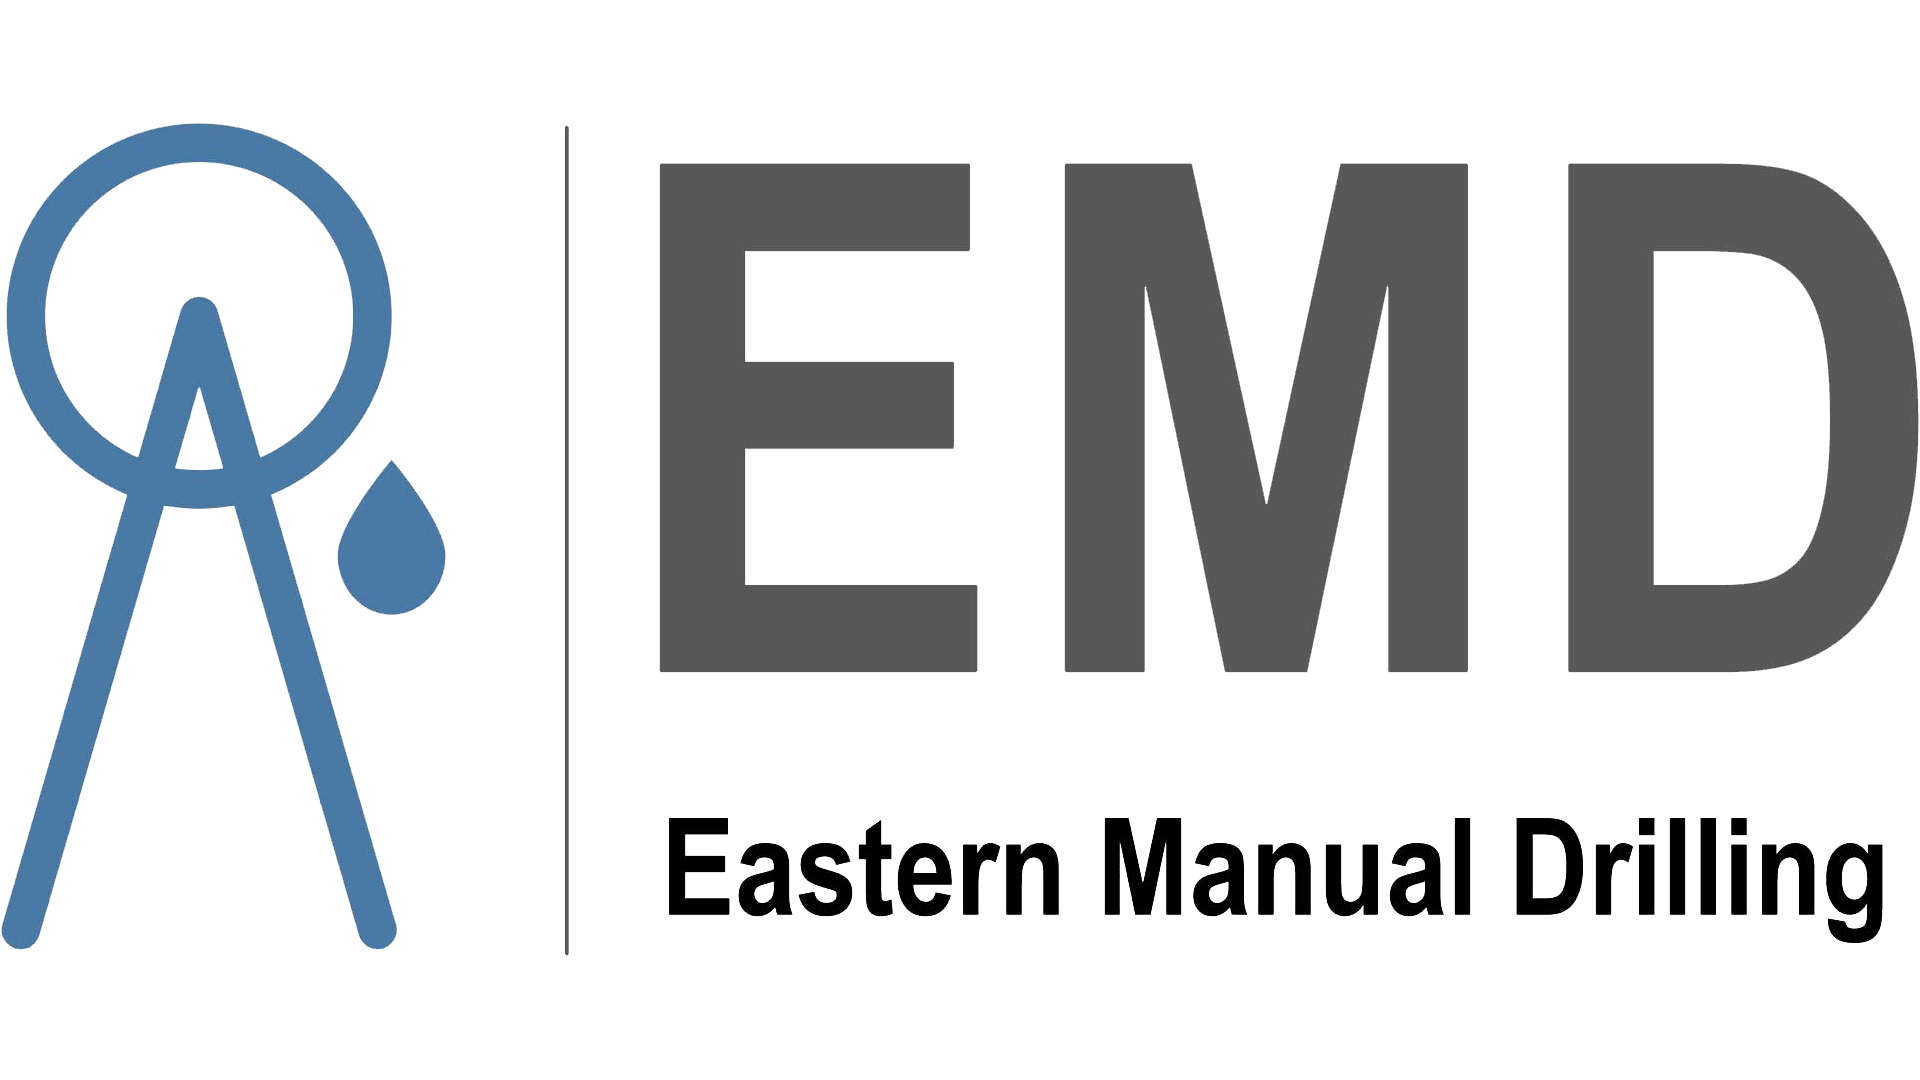 EMD_Logo